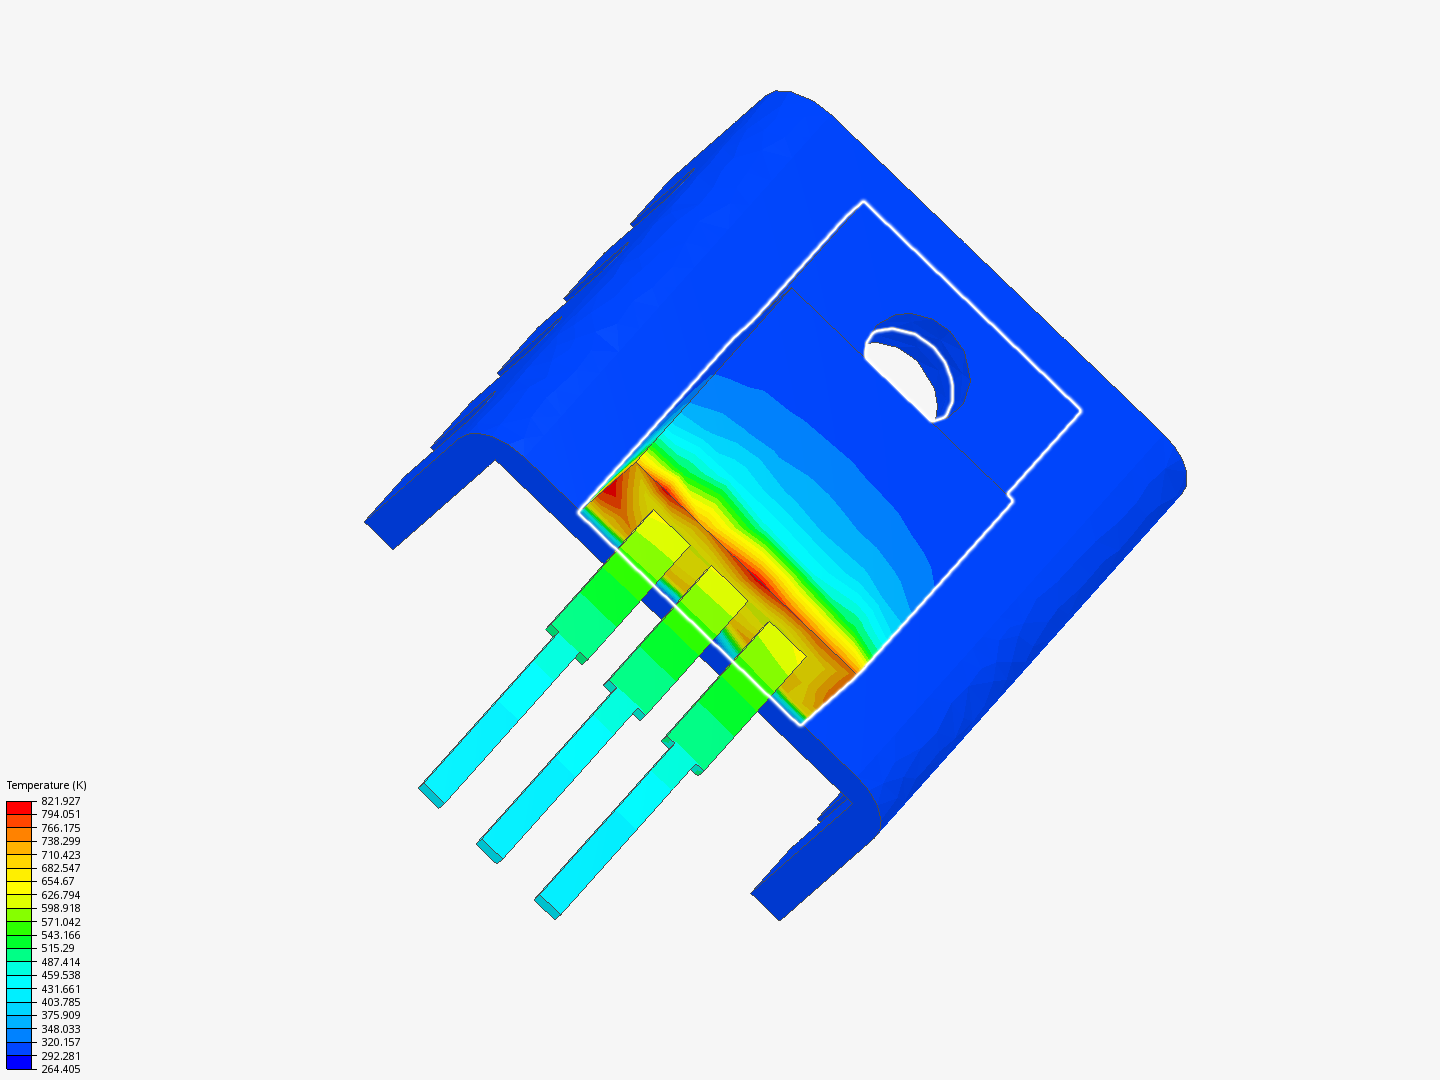 thermal analysis of heatsink&BJT image